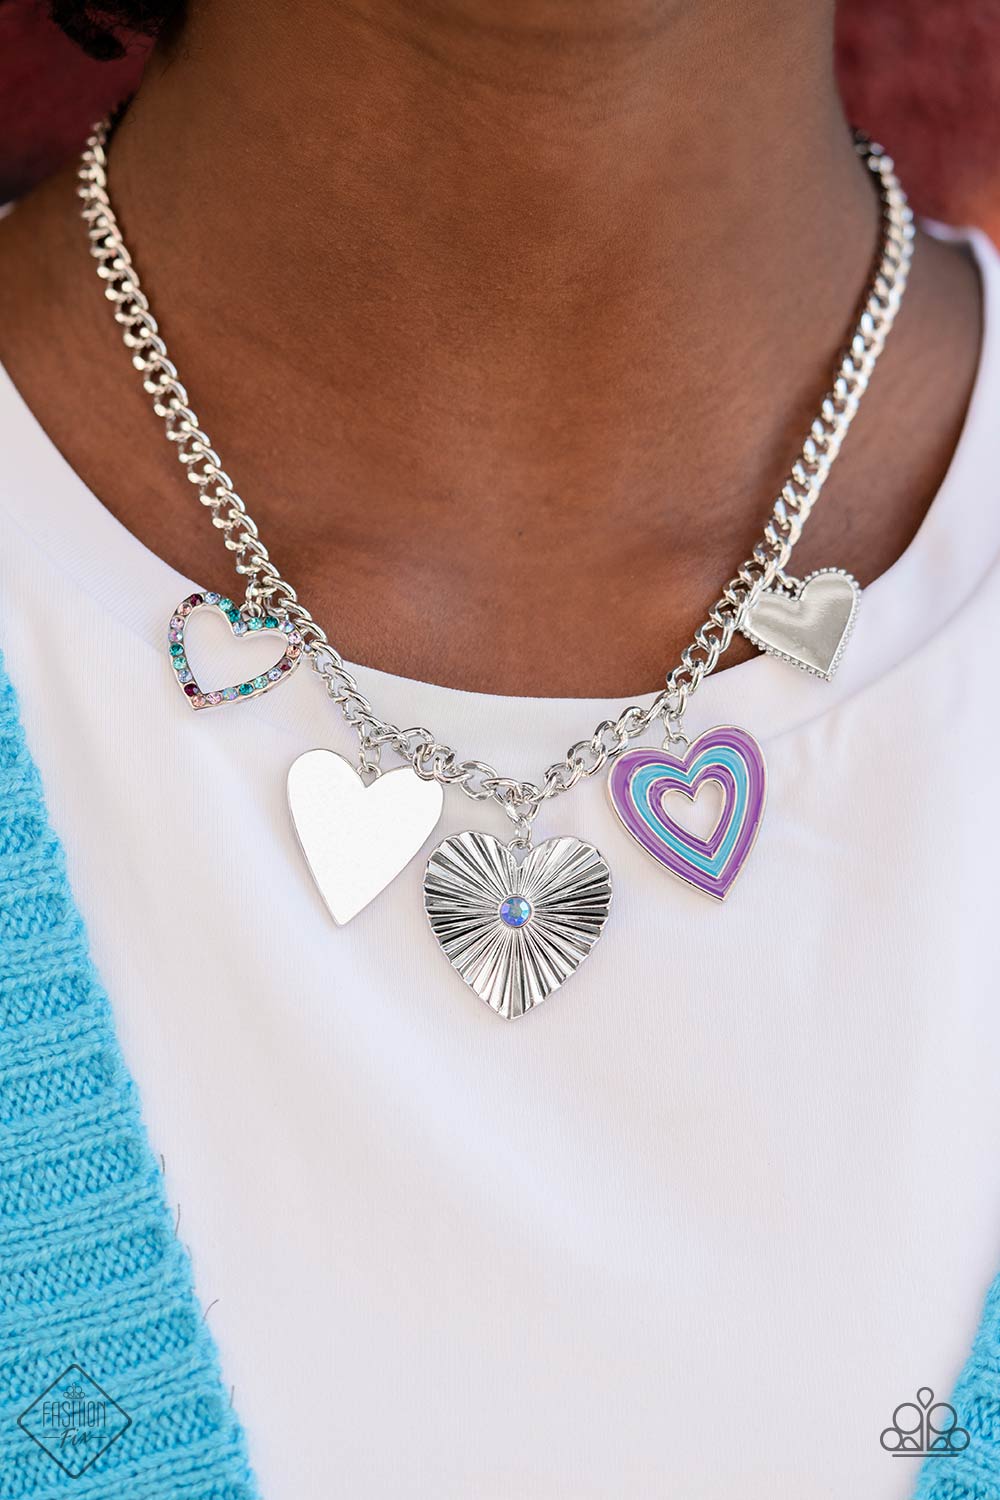 Retro Rhapsody Multi Heart Necklace - Paparazzi Accessories-on model - CarasShop.com - $5 Jewelry by Cara Jewels